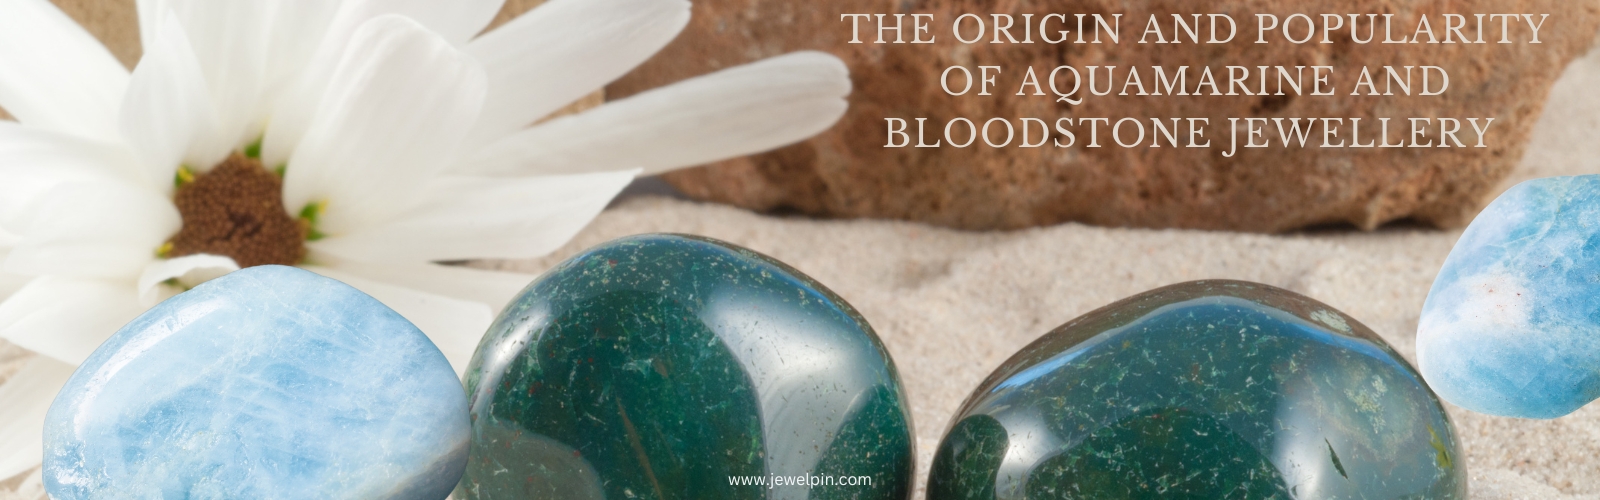 the origin and popularity of aquamarine and bloodstone jewellery